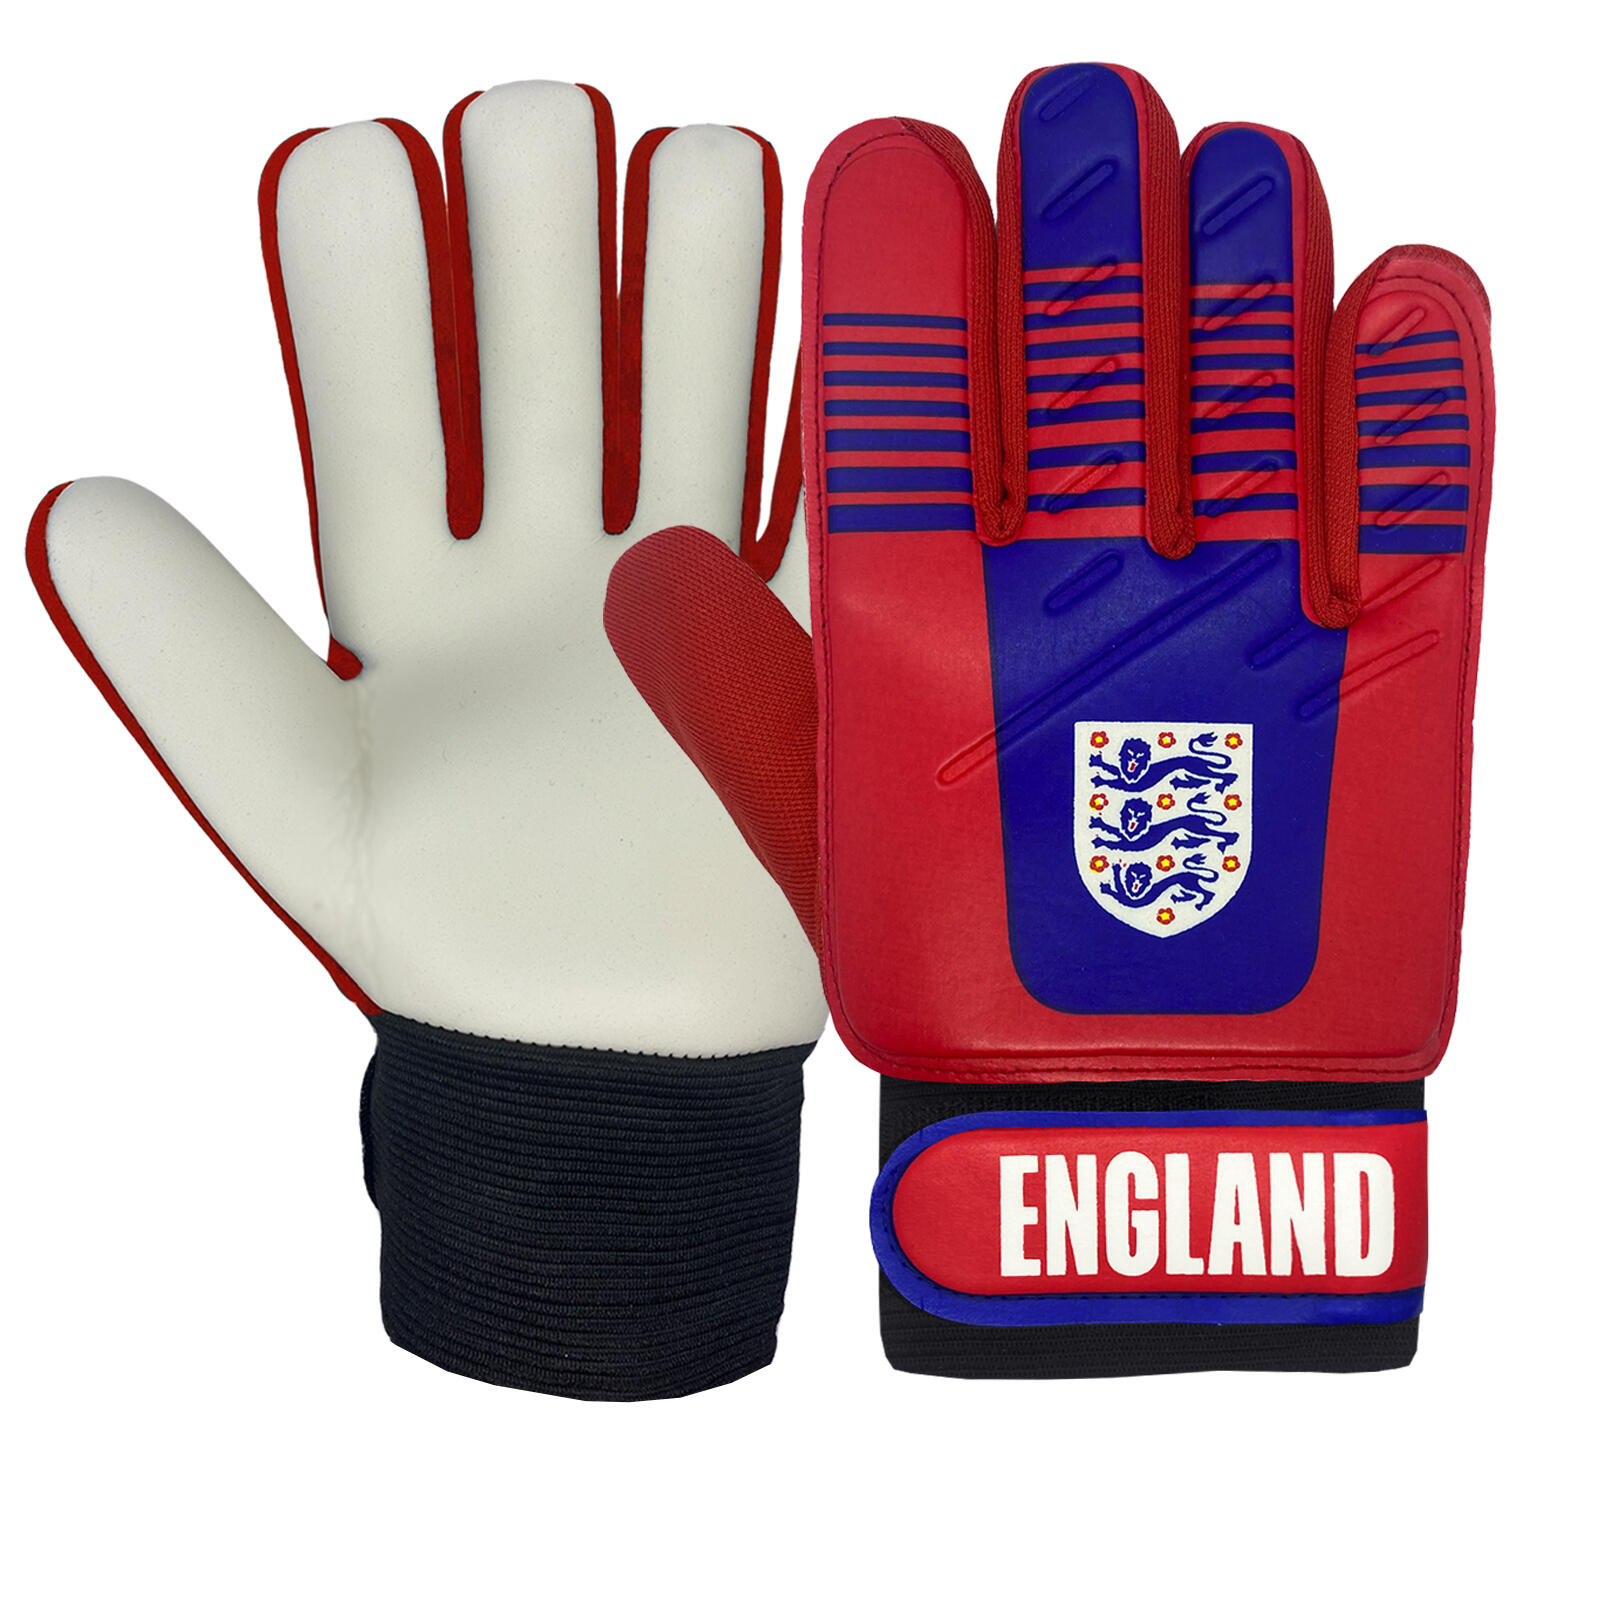 ENGLAND FOOTBALL ASSOCIATION England Boys Gloves Goalie Goalkeeper Kids Youths OFFICIAL Football Gift